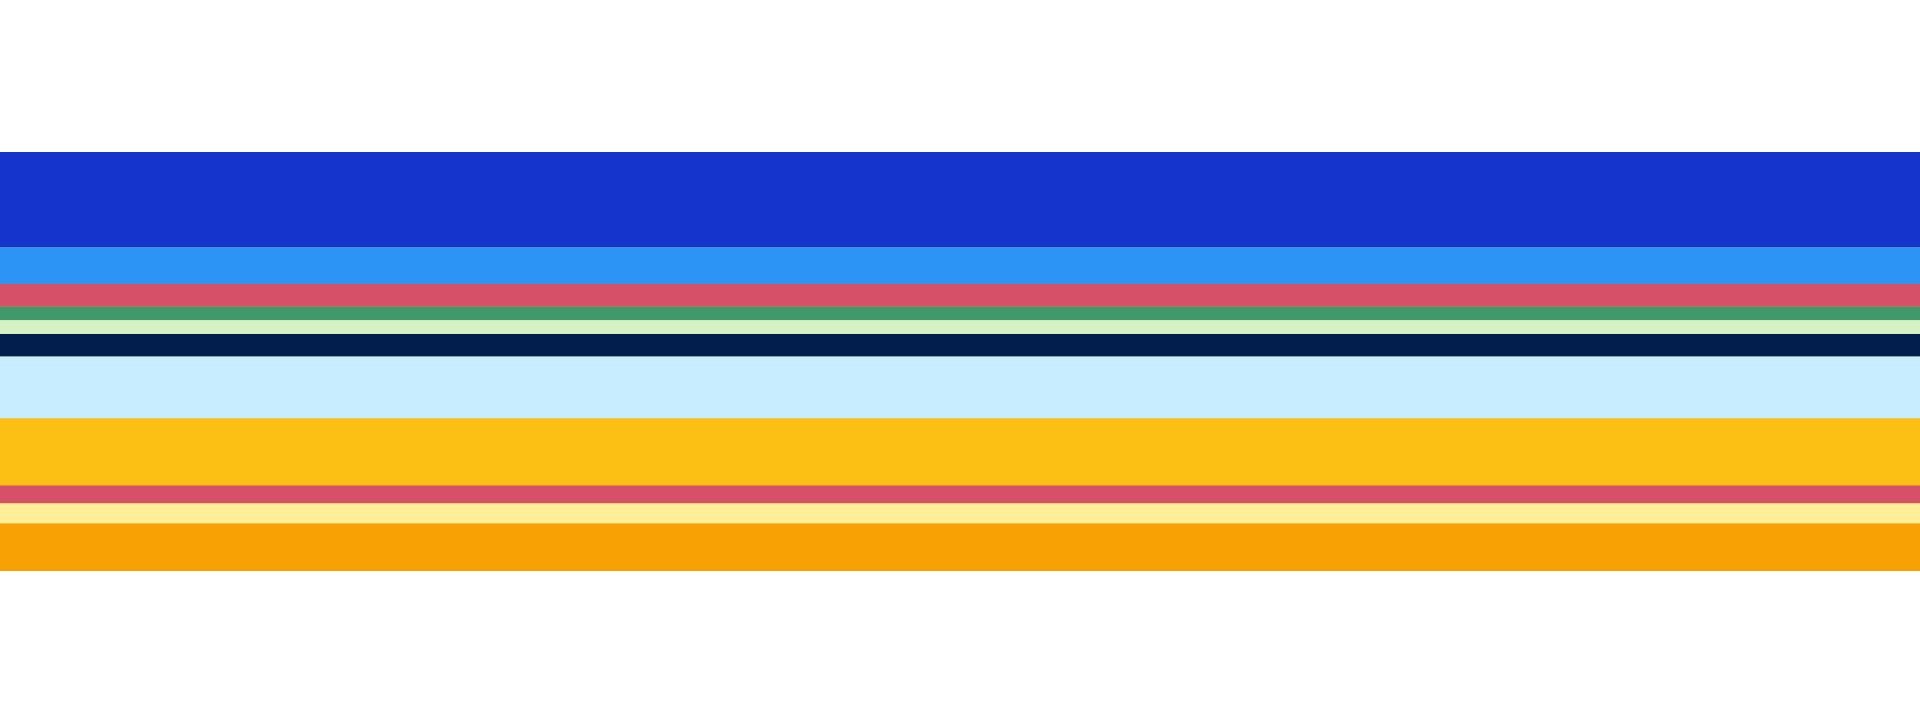 visa olympic striped banner